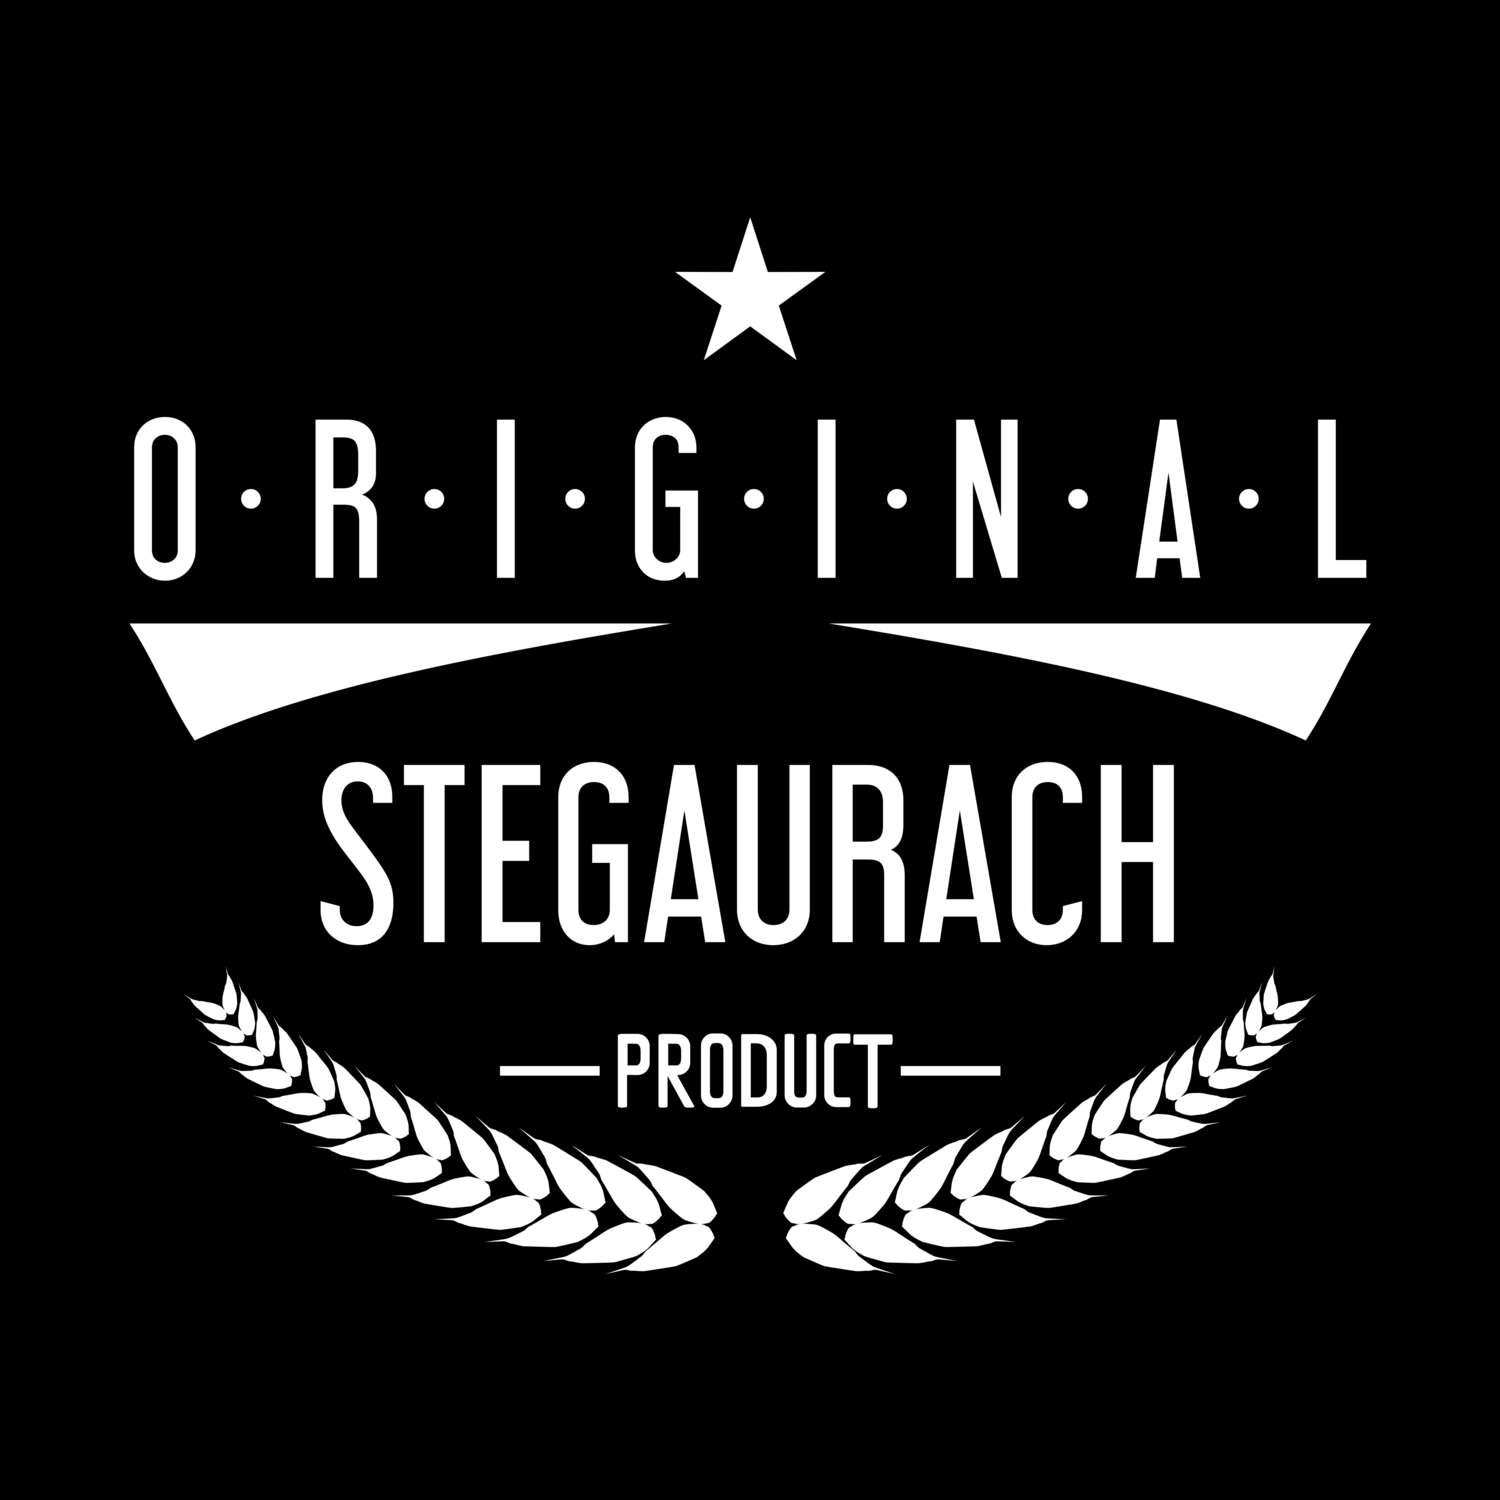 Stegaurach T-Shirt »Original Product«